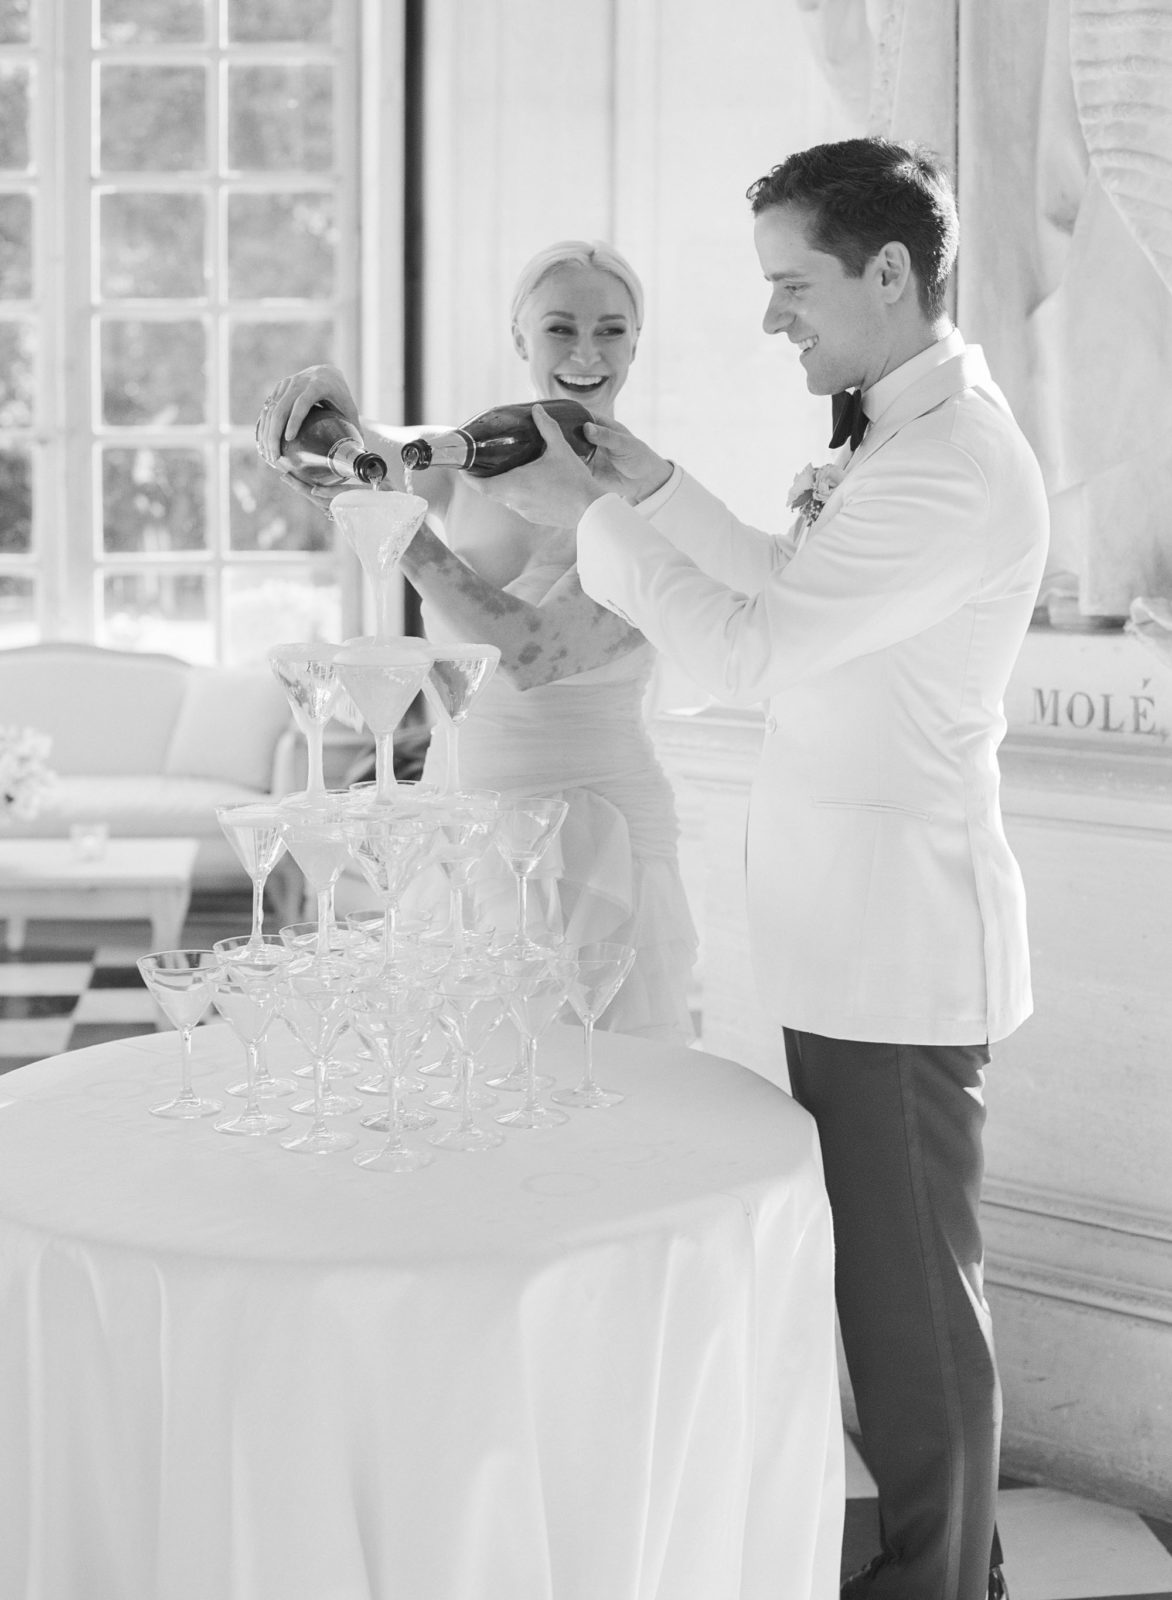 Chateau Champlatreux Wedding Photographer | France Luxury Wedding | Paris Film Photographer | Molly Carr Photography